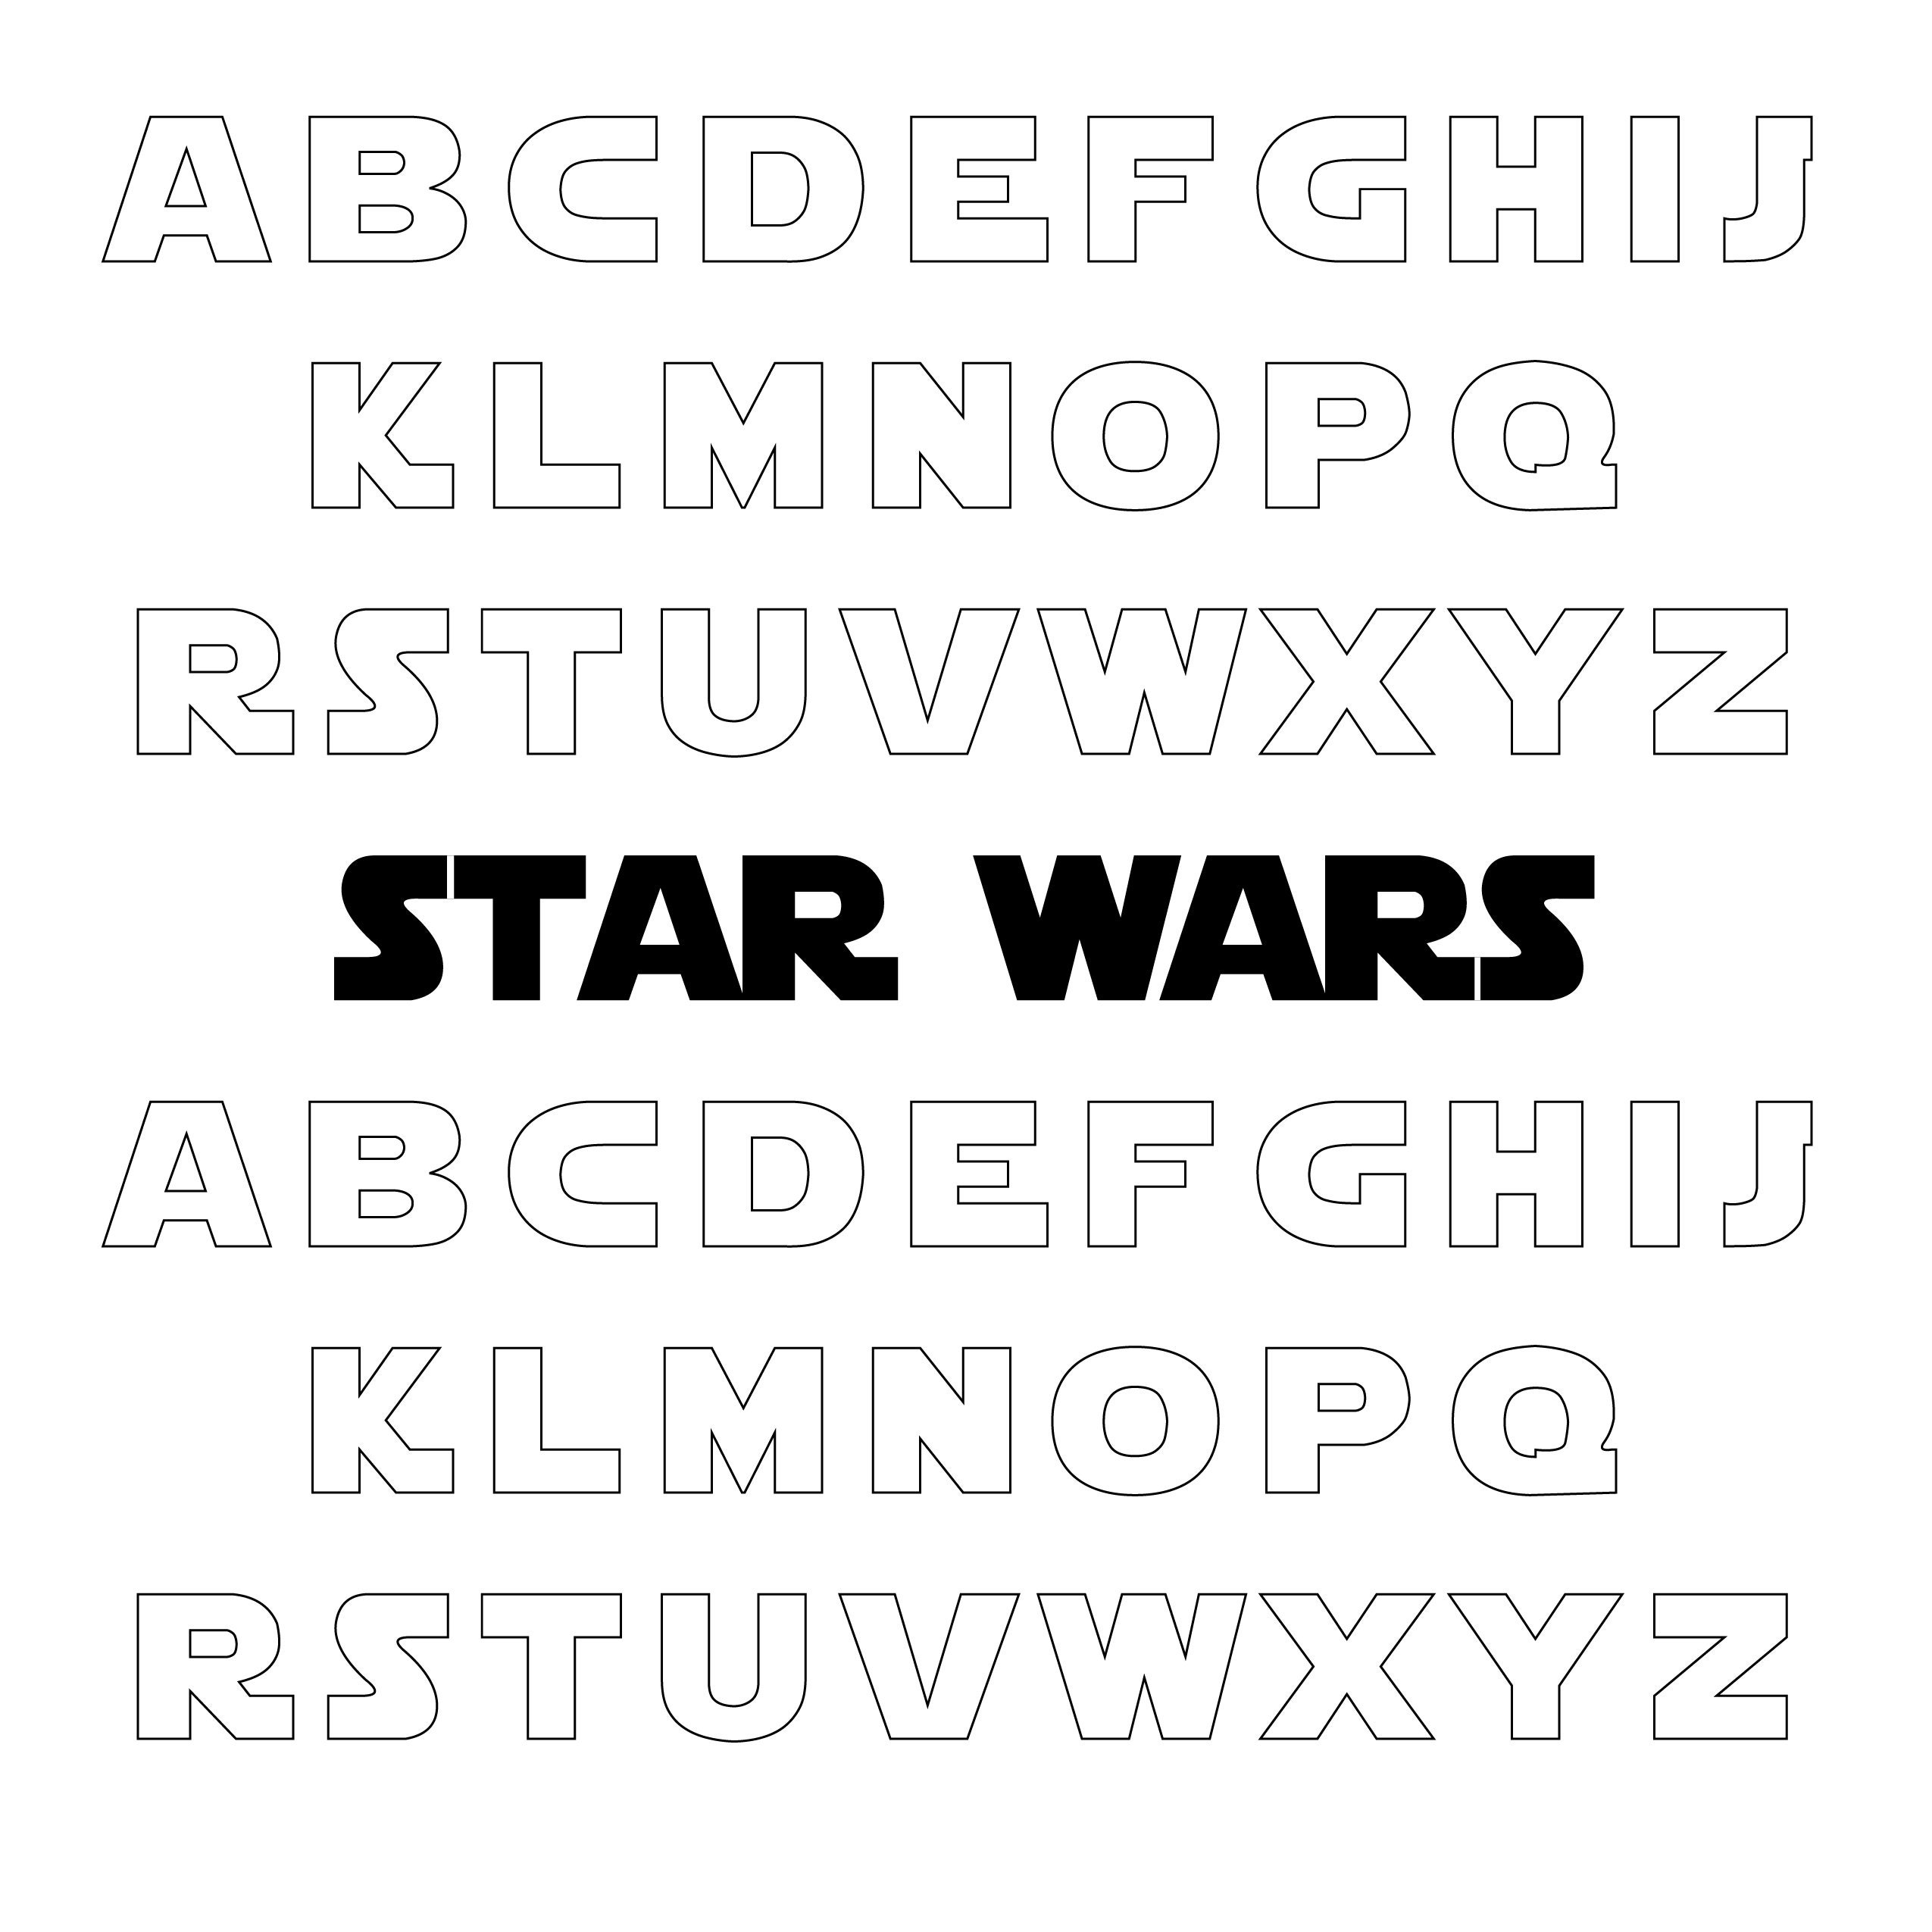 Star Wars Letters Font Printable Diy Paper Letters Outlines Only Instant Download Pdf Bulletin Board Alphabet